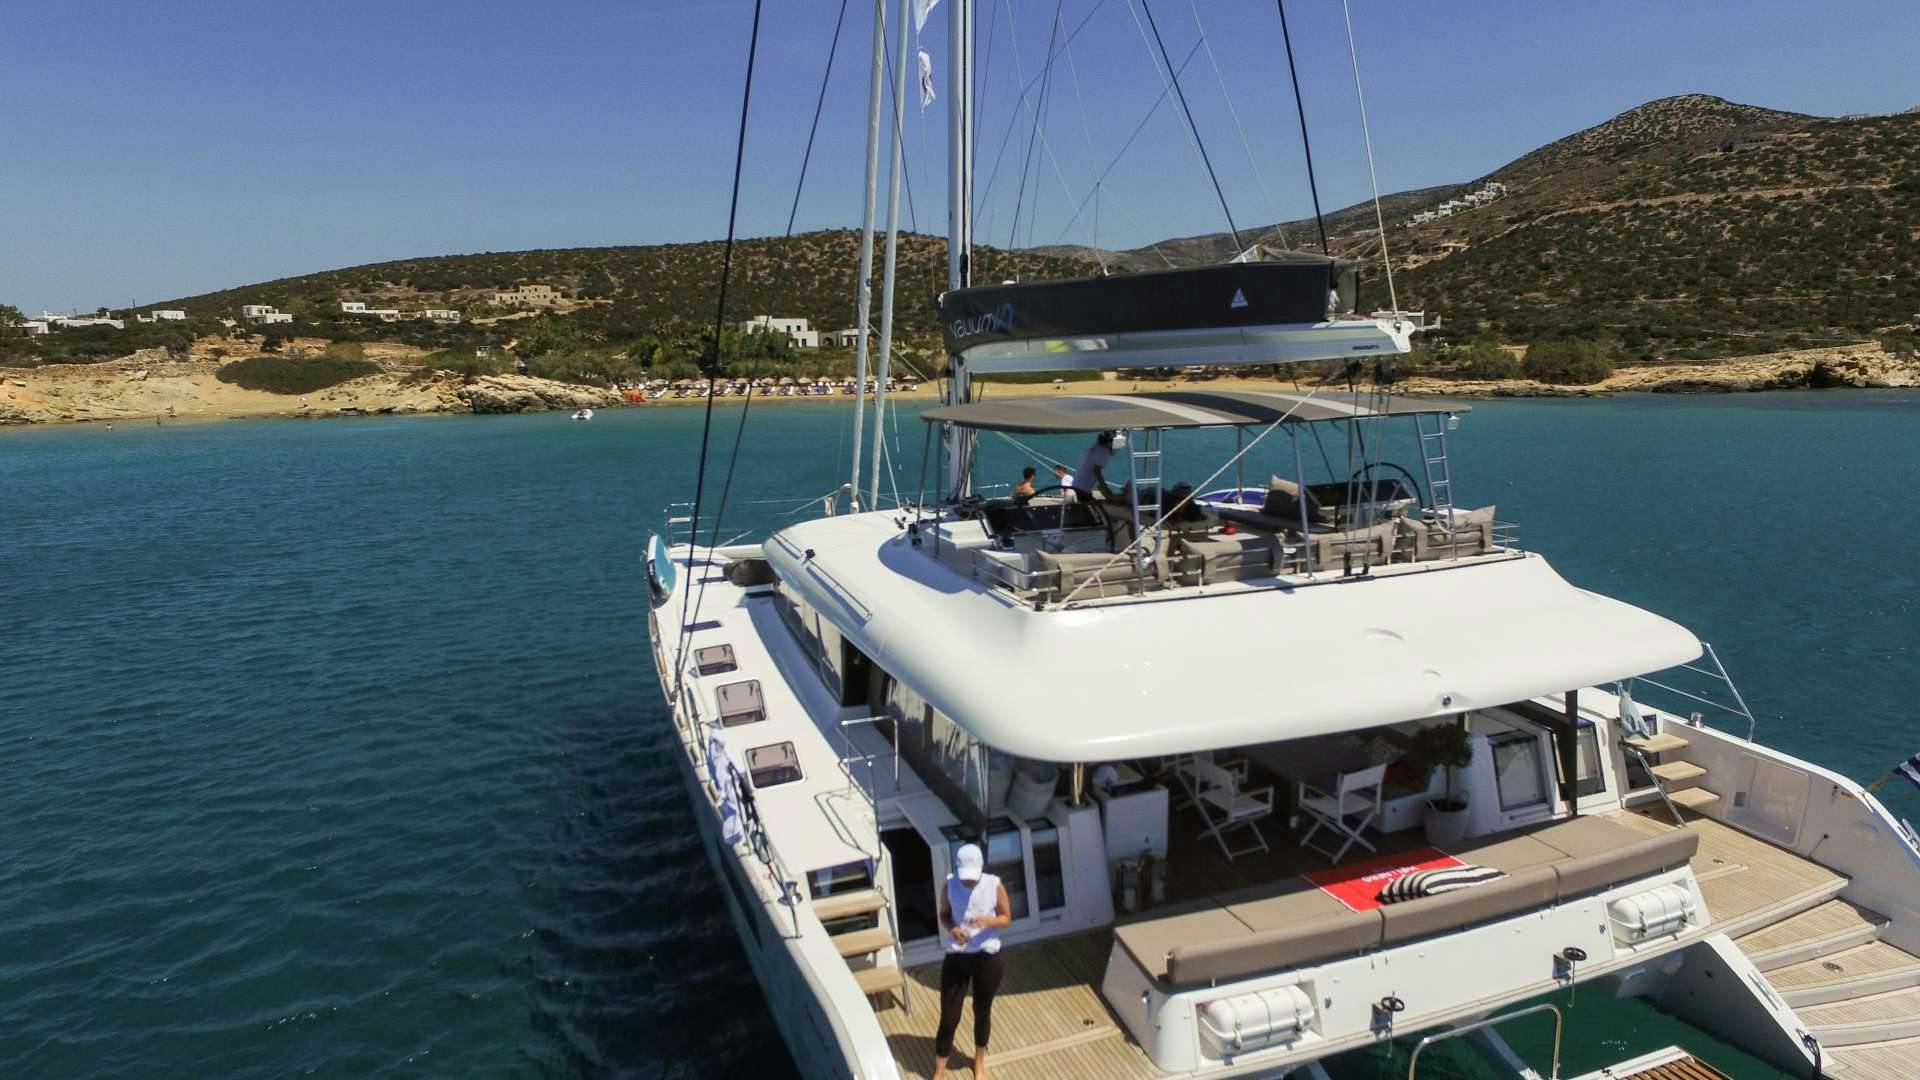 valium62 - Yacht Charter Lindigo & Boat hire in Greece 1